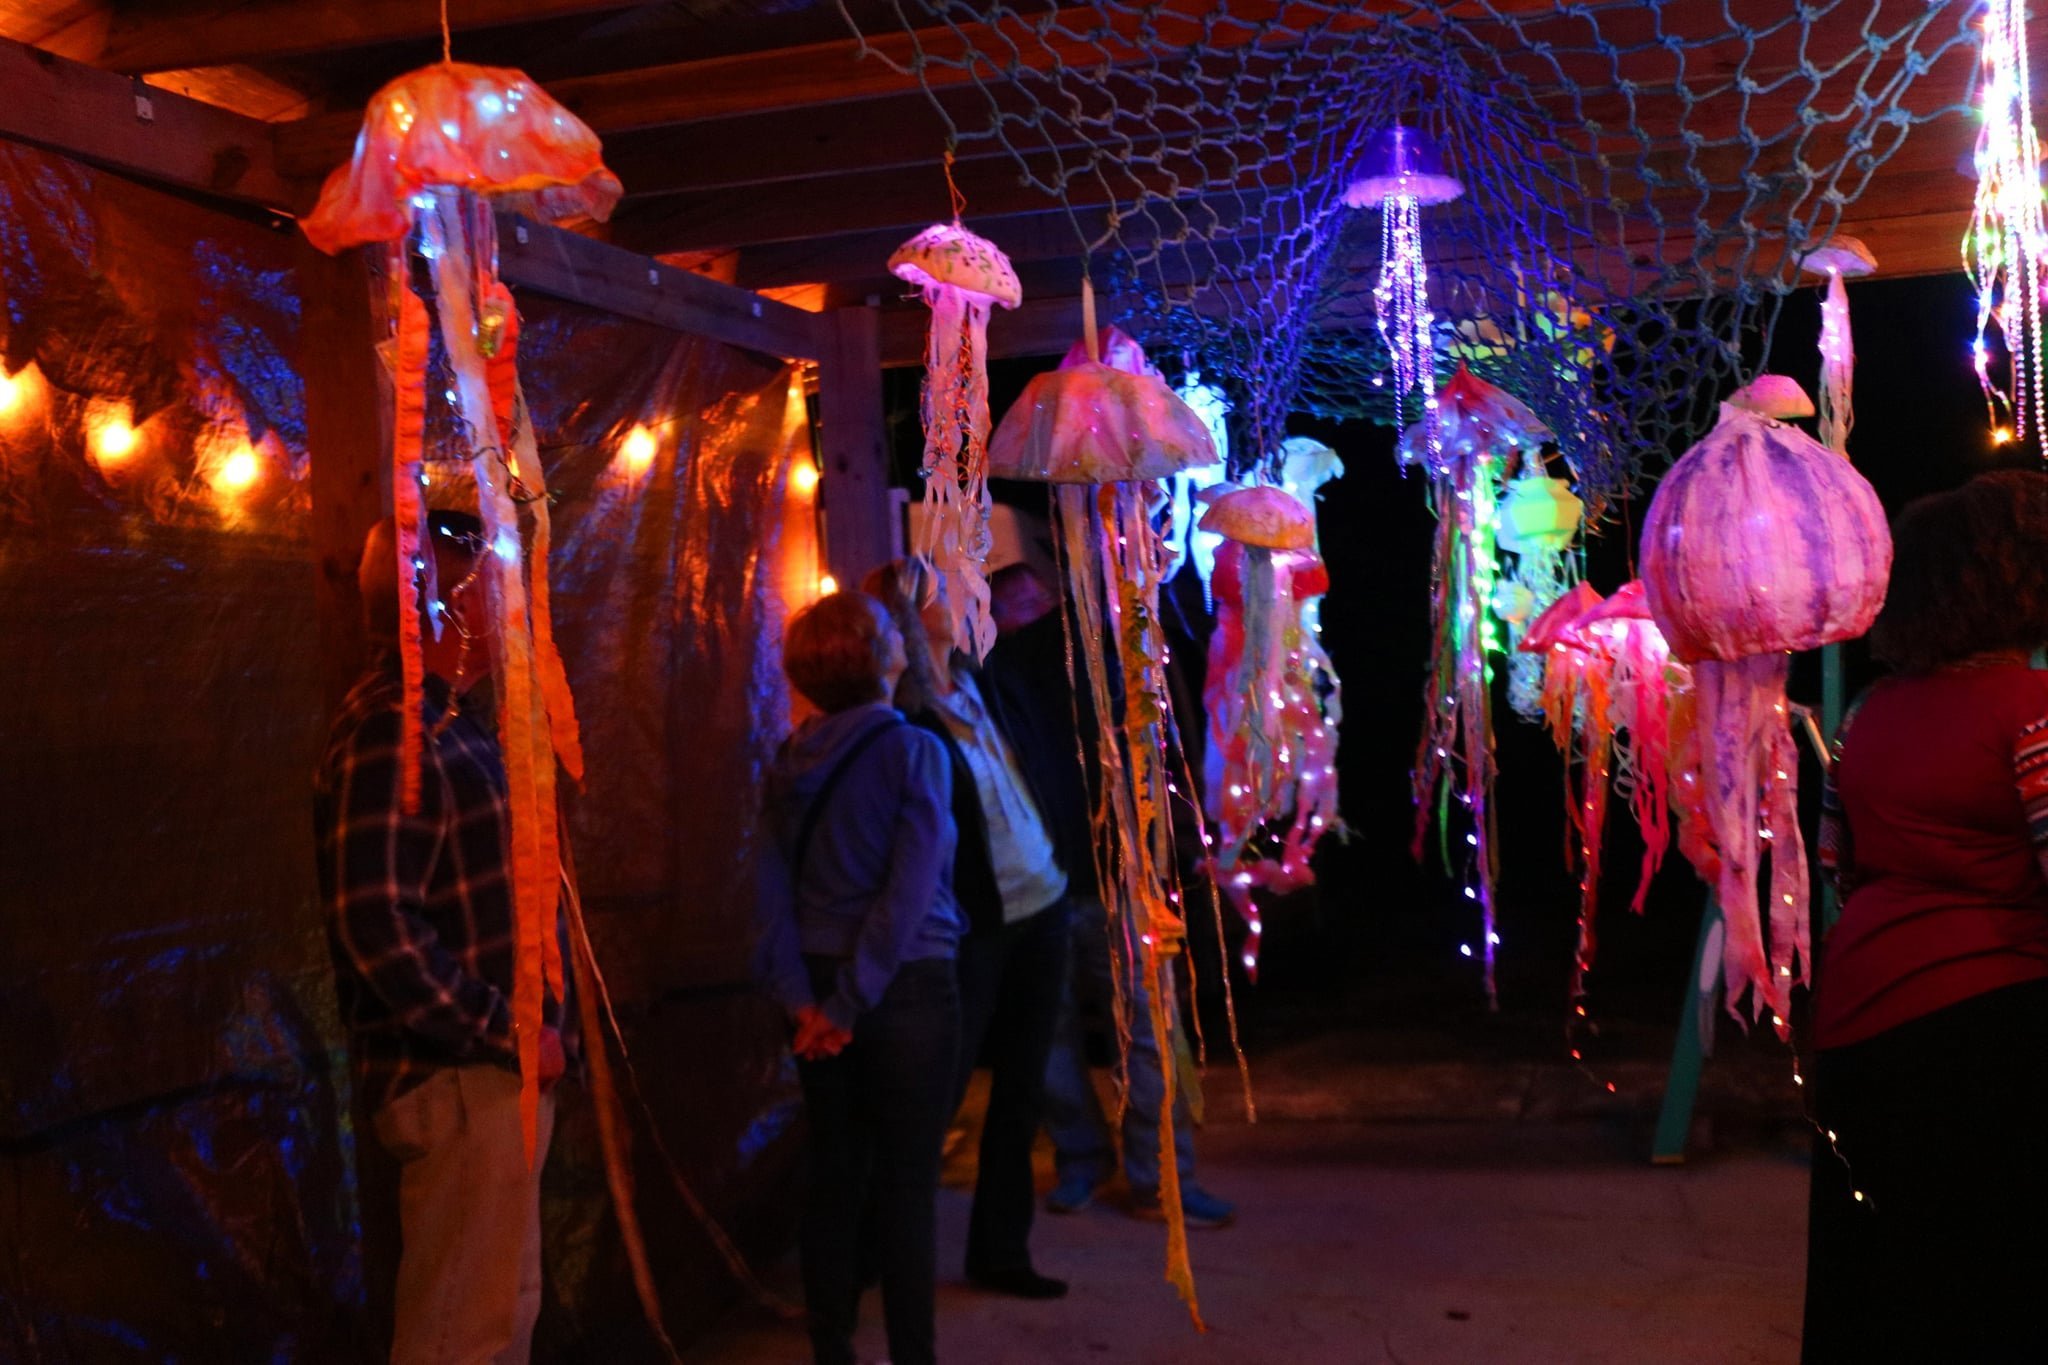 Jellyfish lanterns glowing